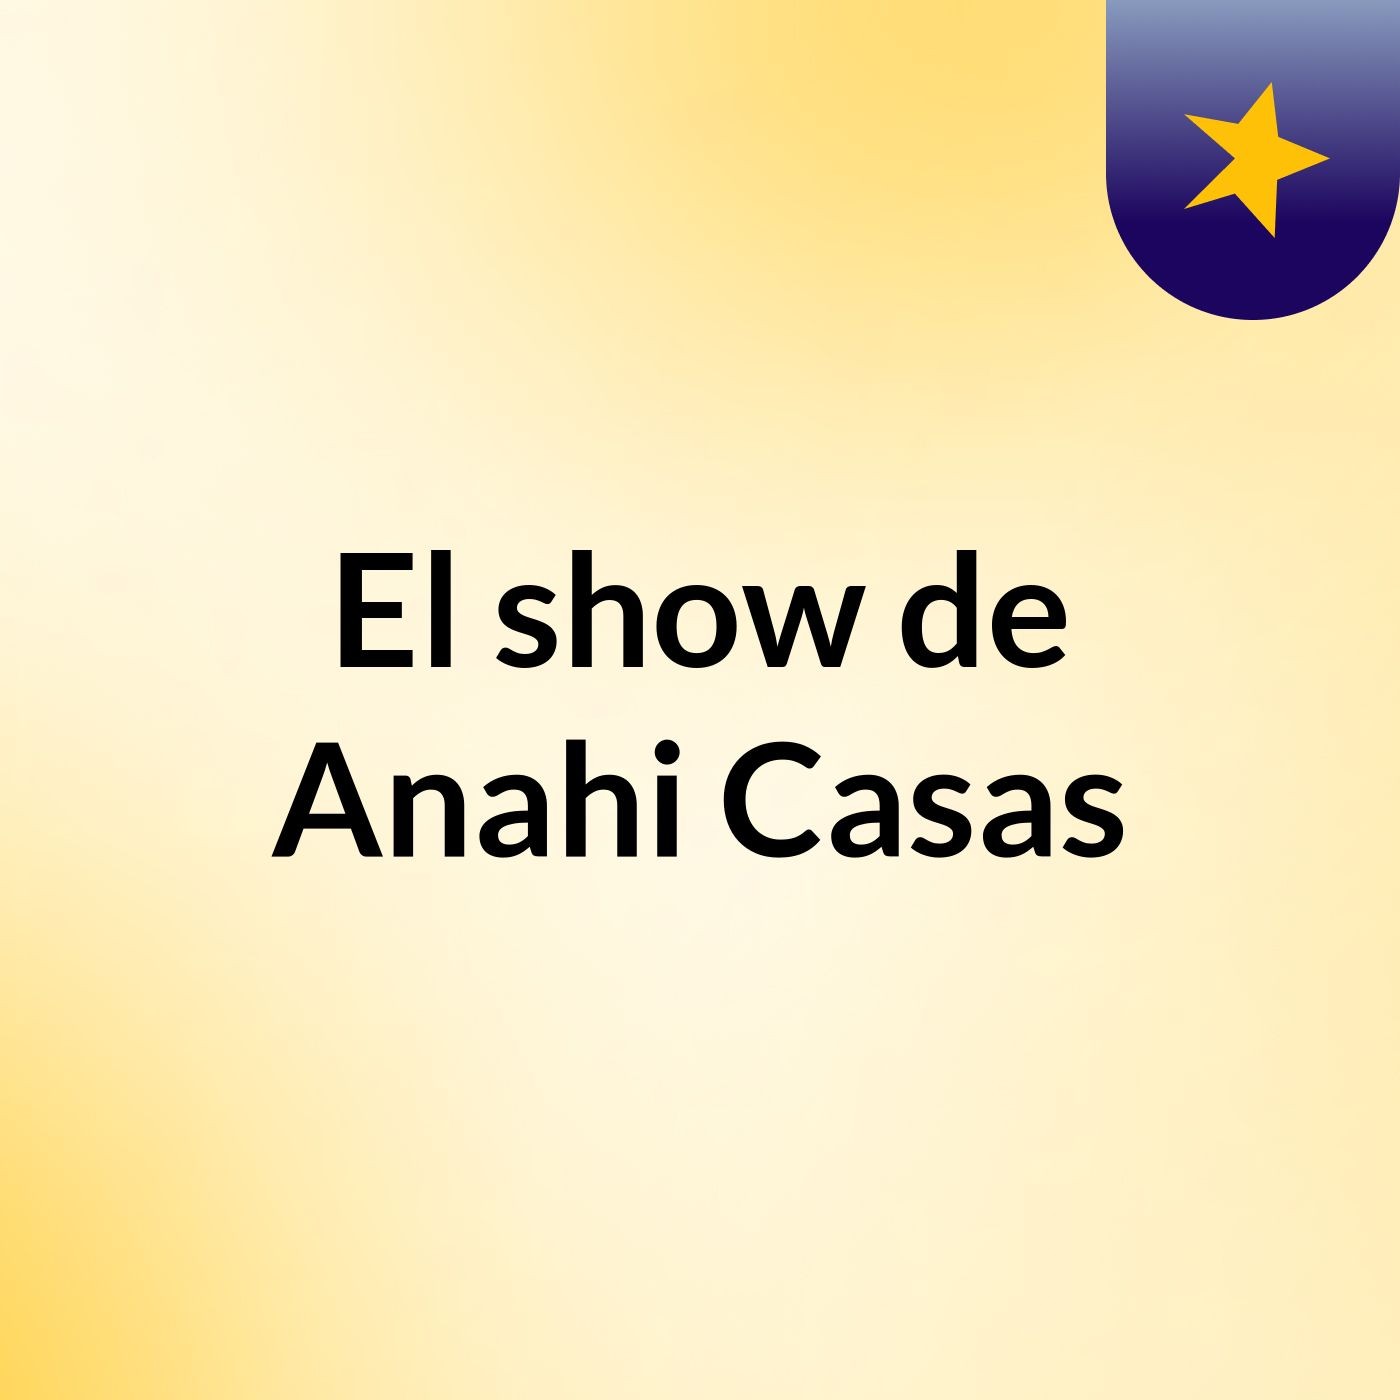 El show de Anahi Casas